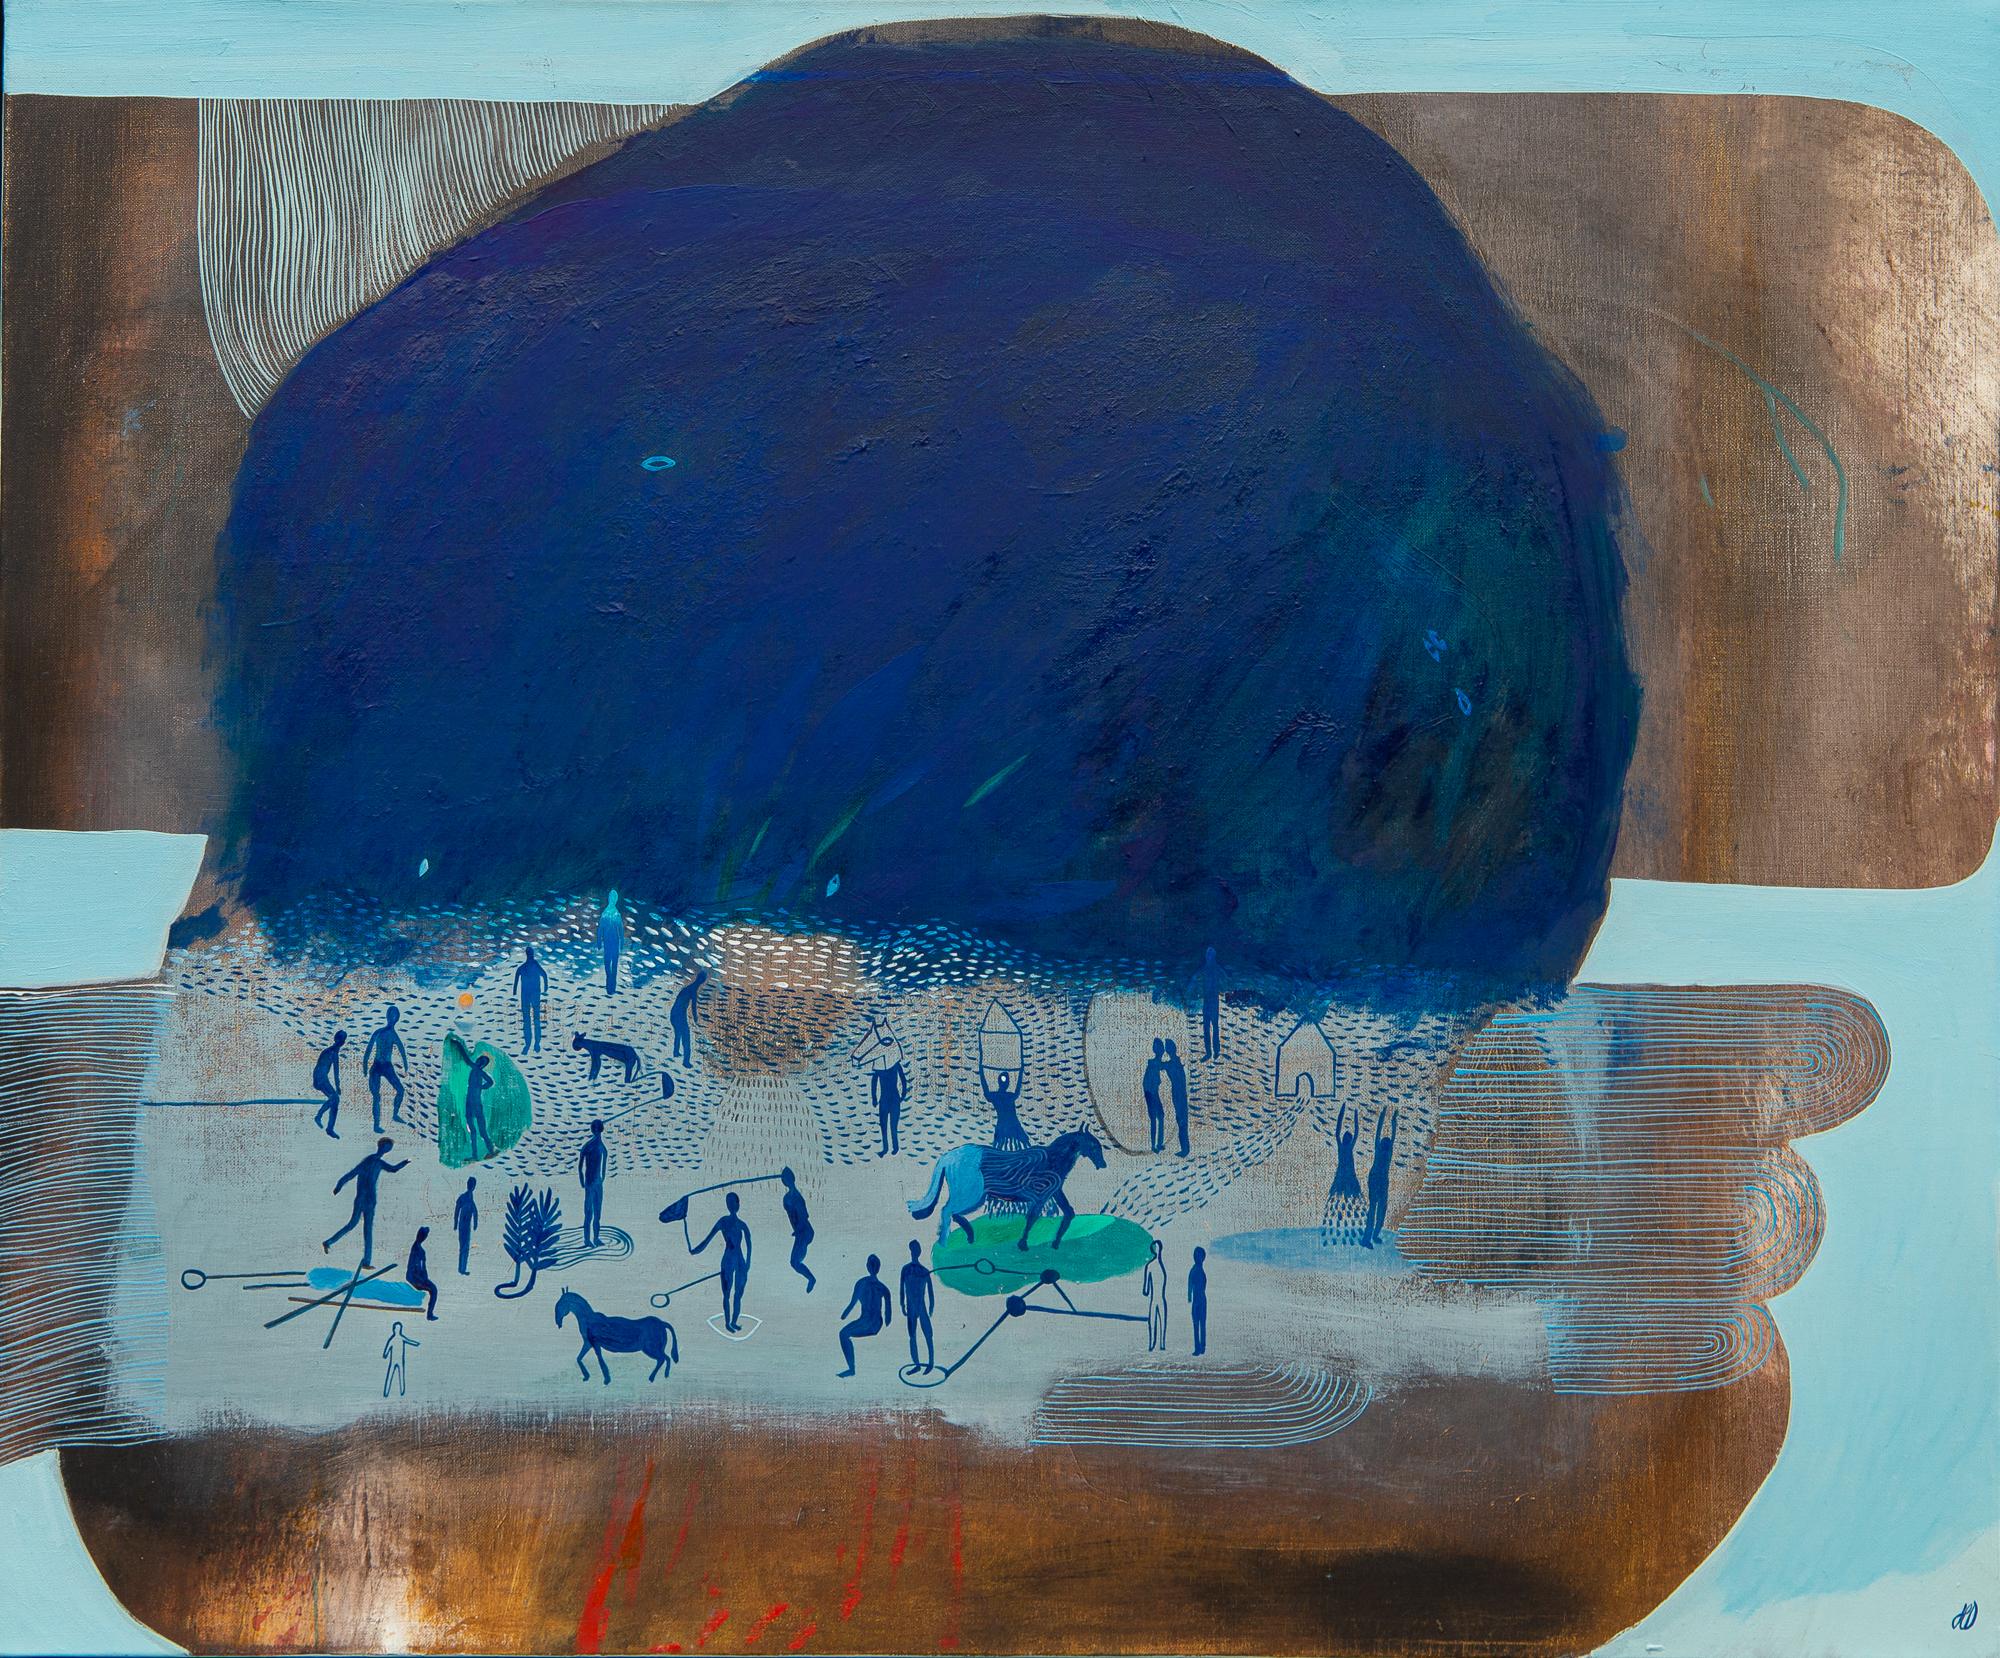 Take some fresh air #2 Hélène Duclos 21st Century painting Contemporary art blue